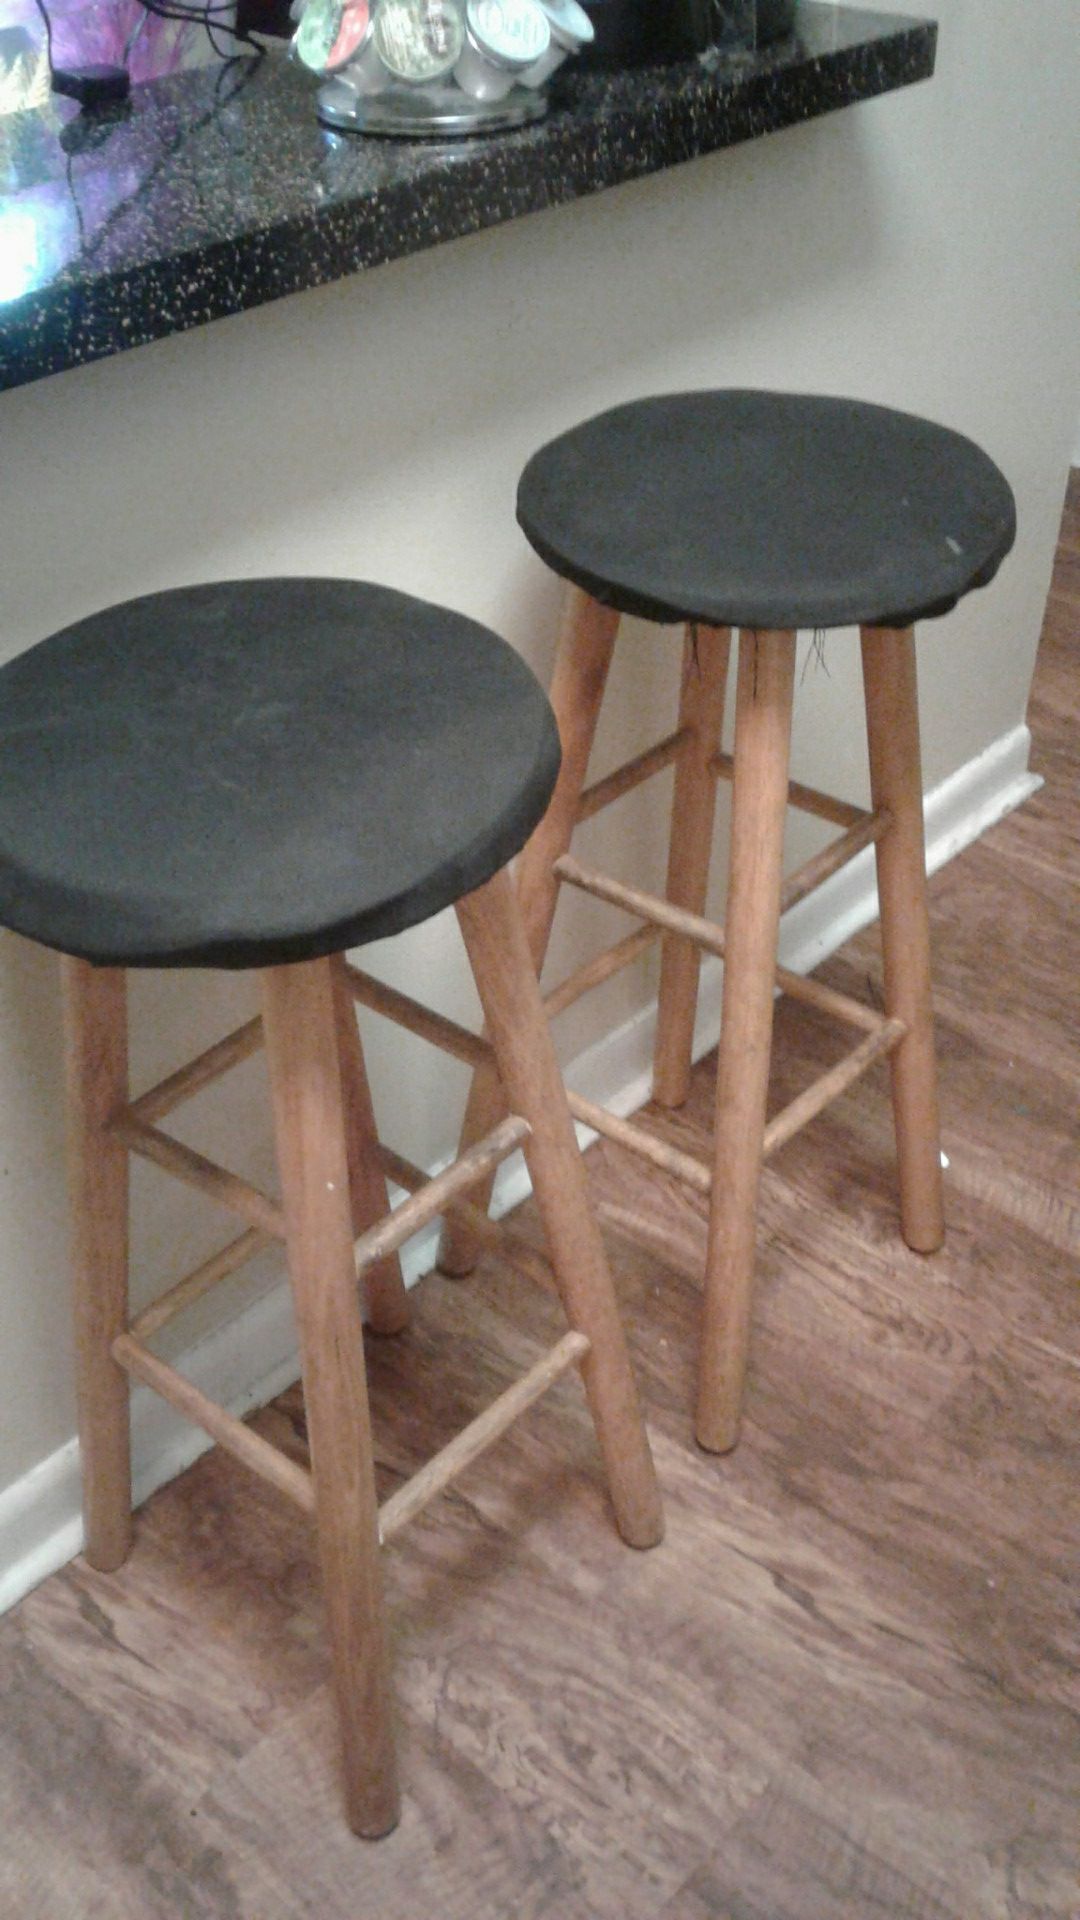 2 wooden stools $10